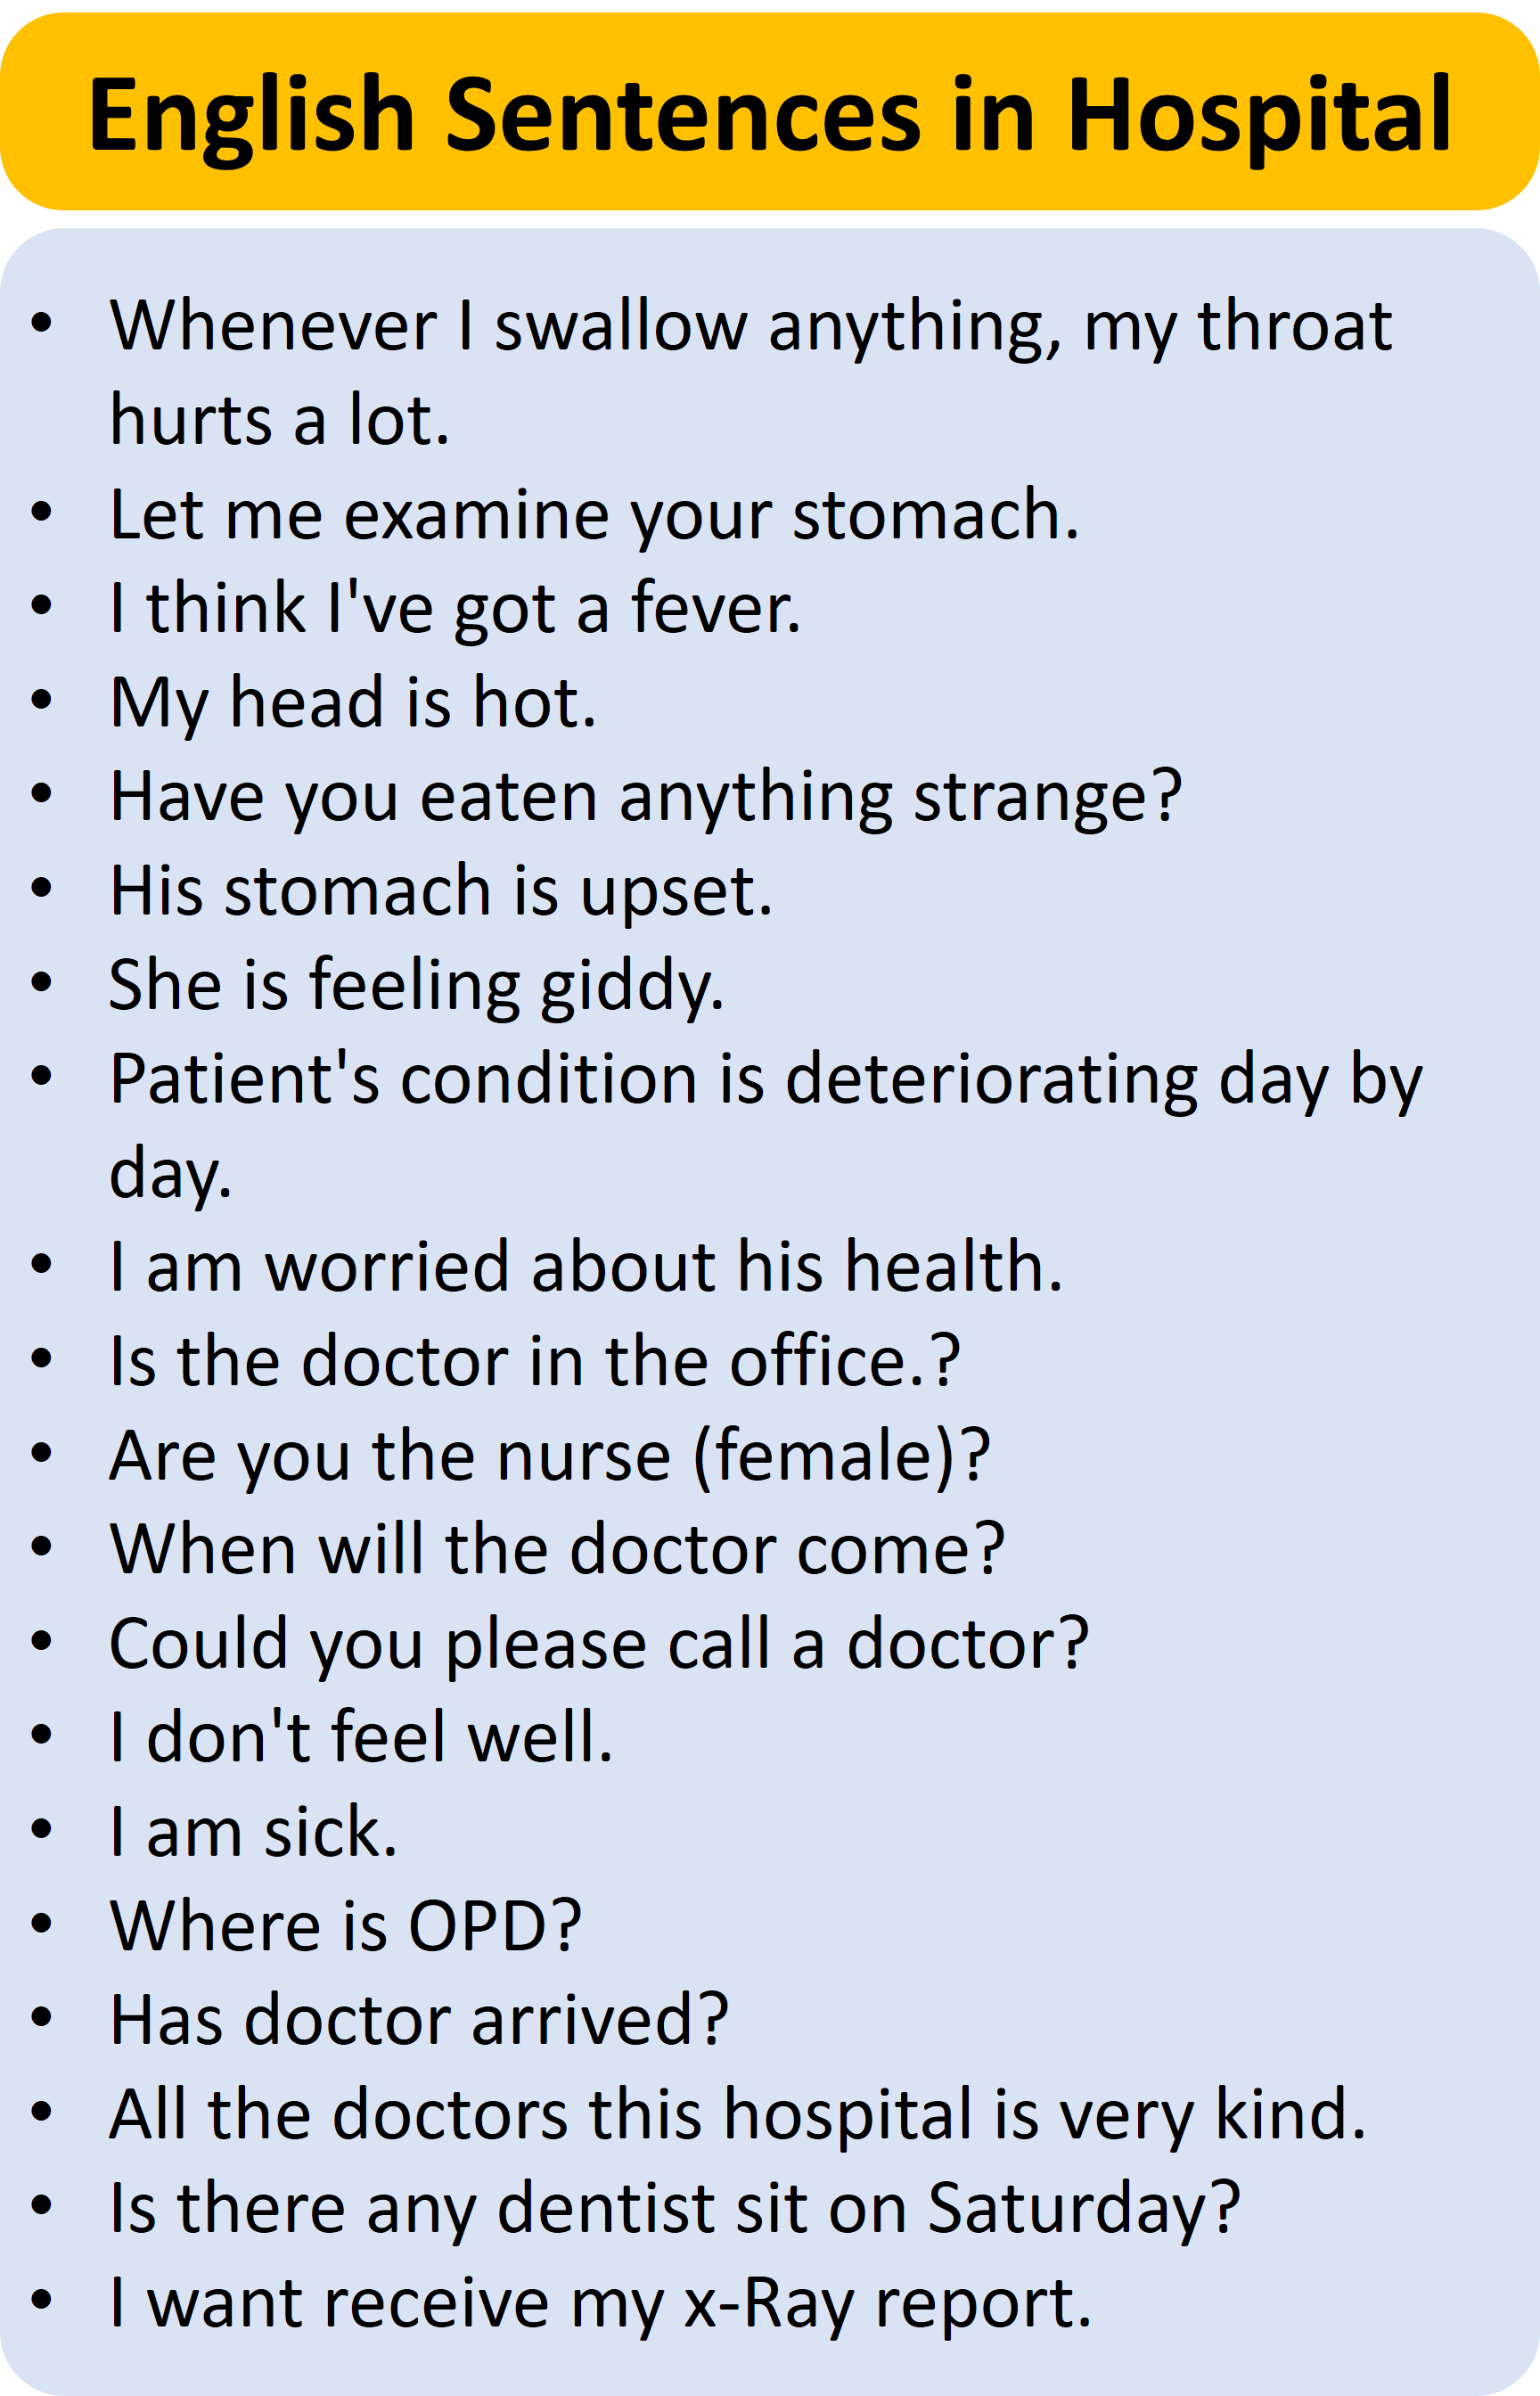 hospital sentences in English about making sentence